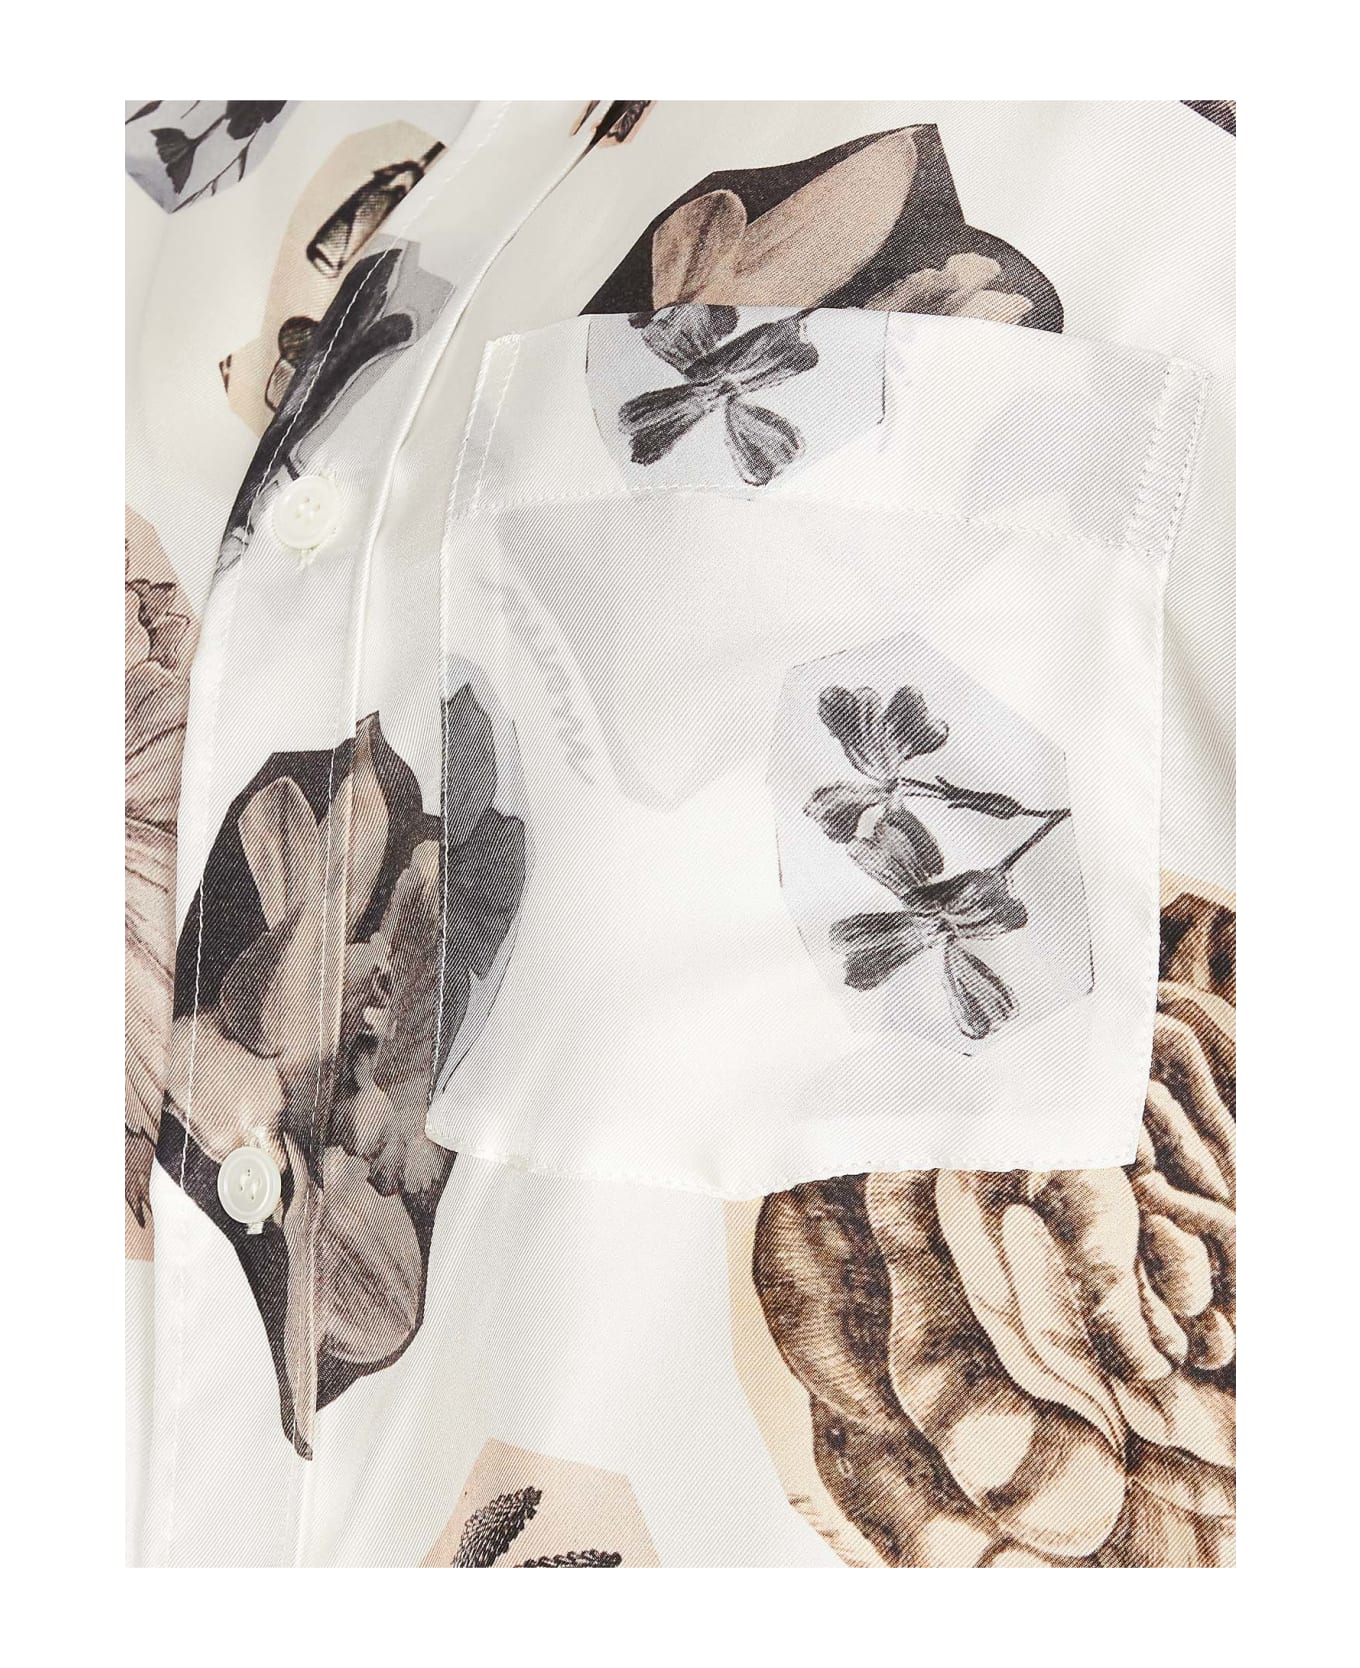 Marni Floral Print Sleeveless Shirt - White